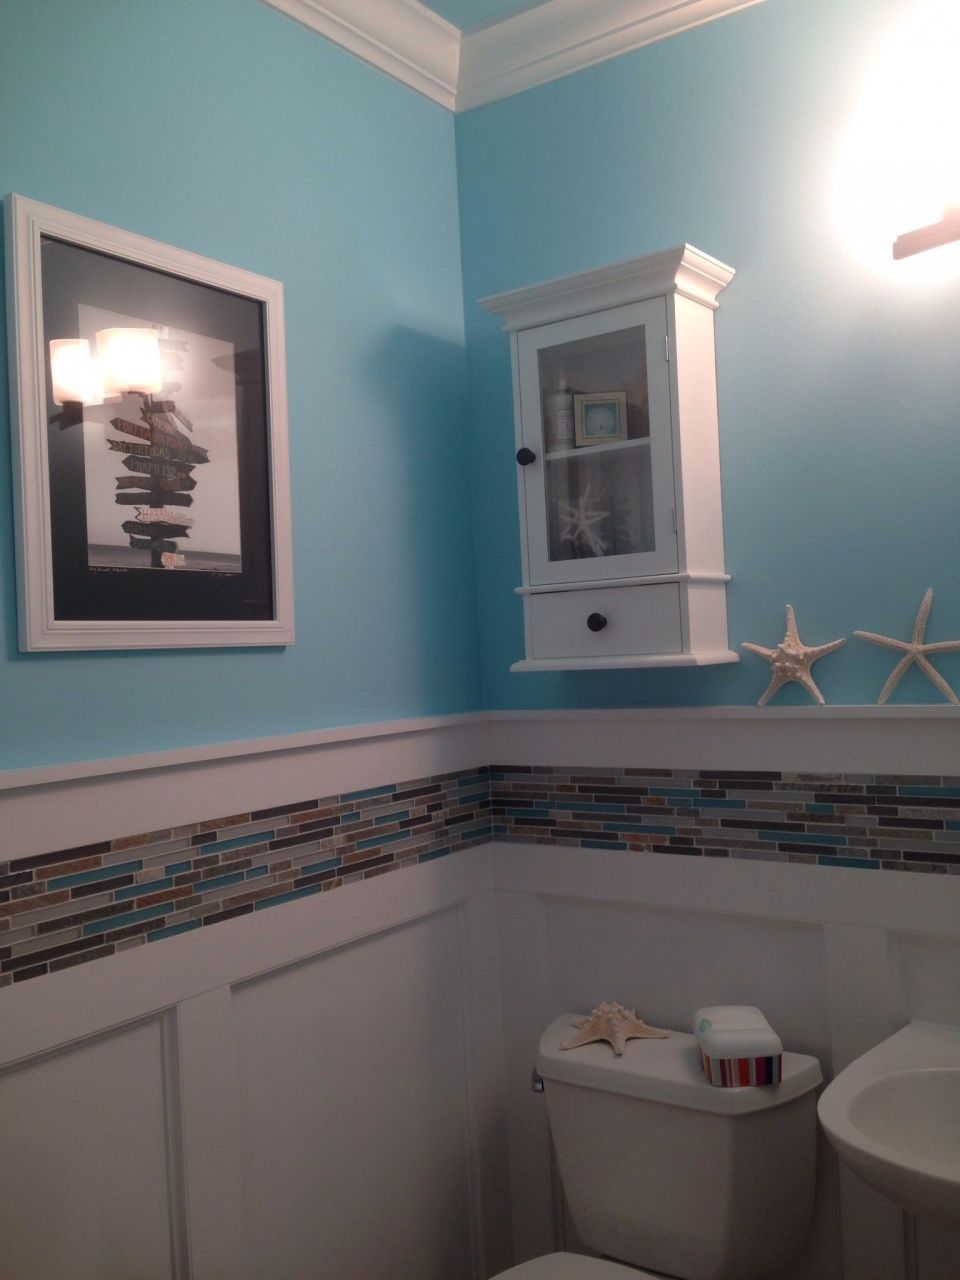 Aqua and Gray Bathroom Decor in 2020 Gray bathroom decor, Turquoise